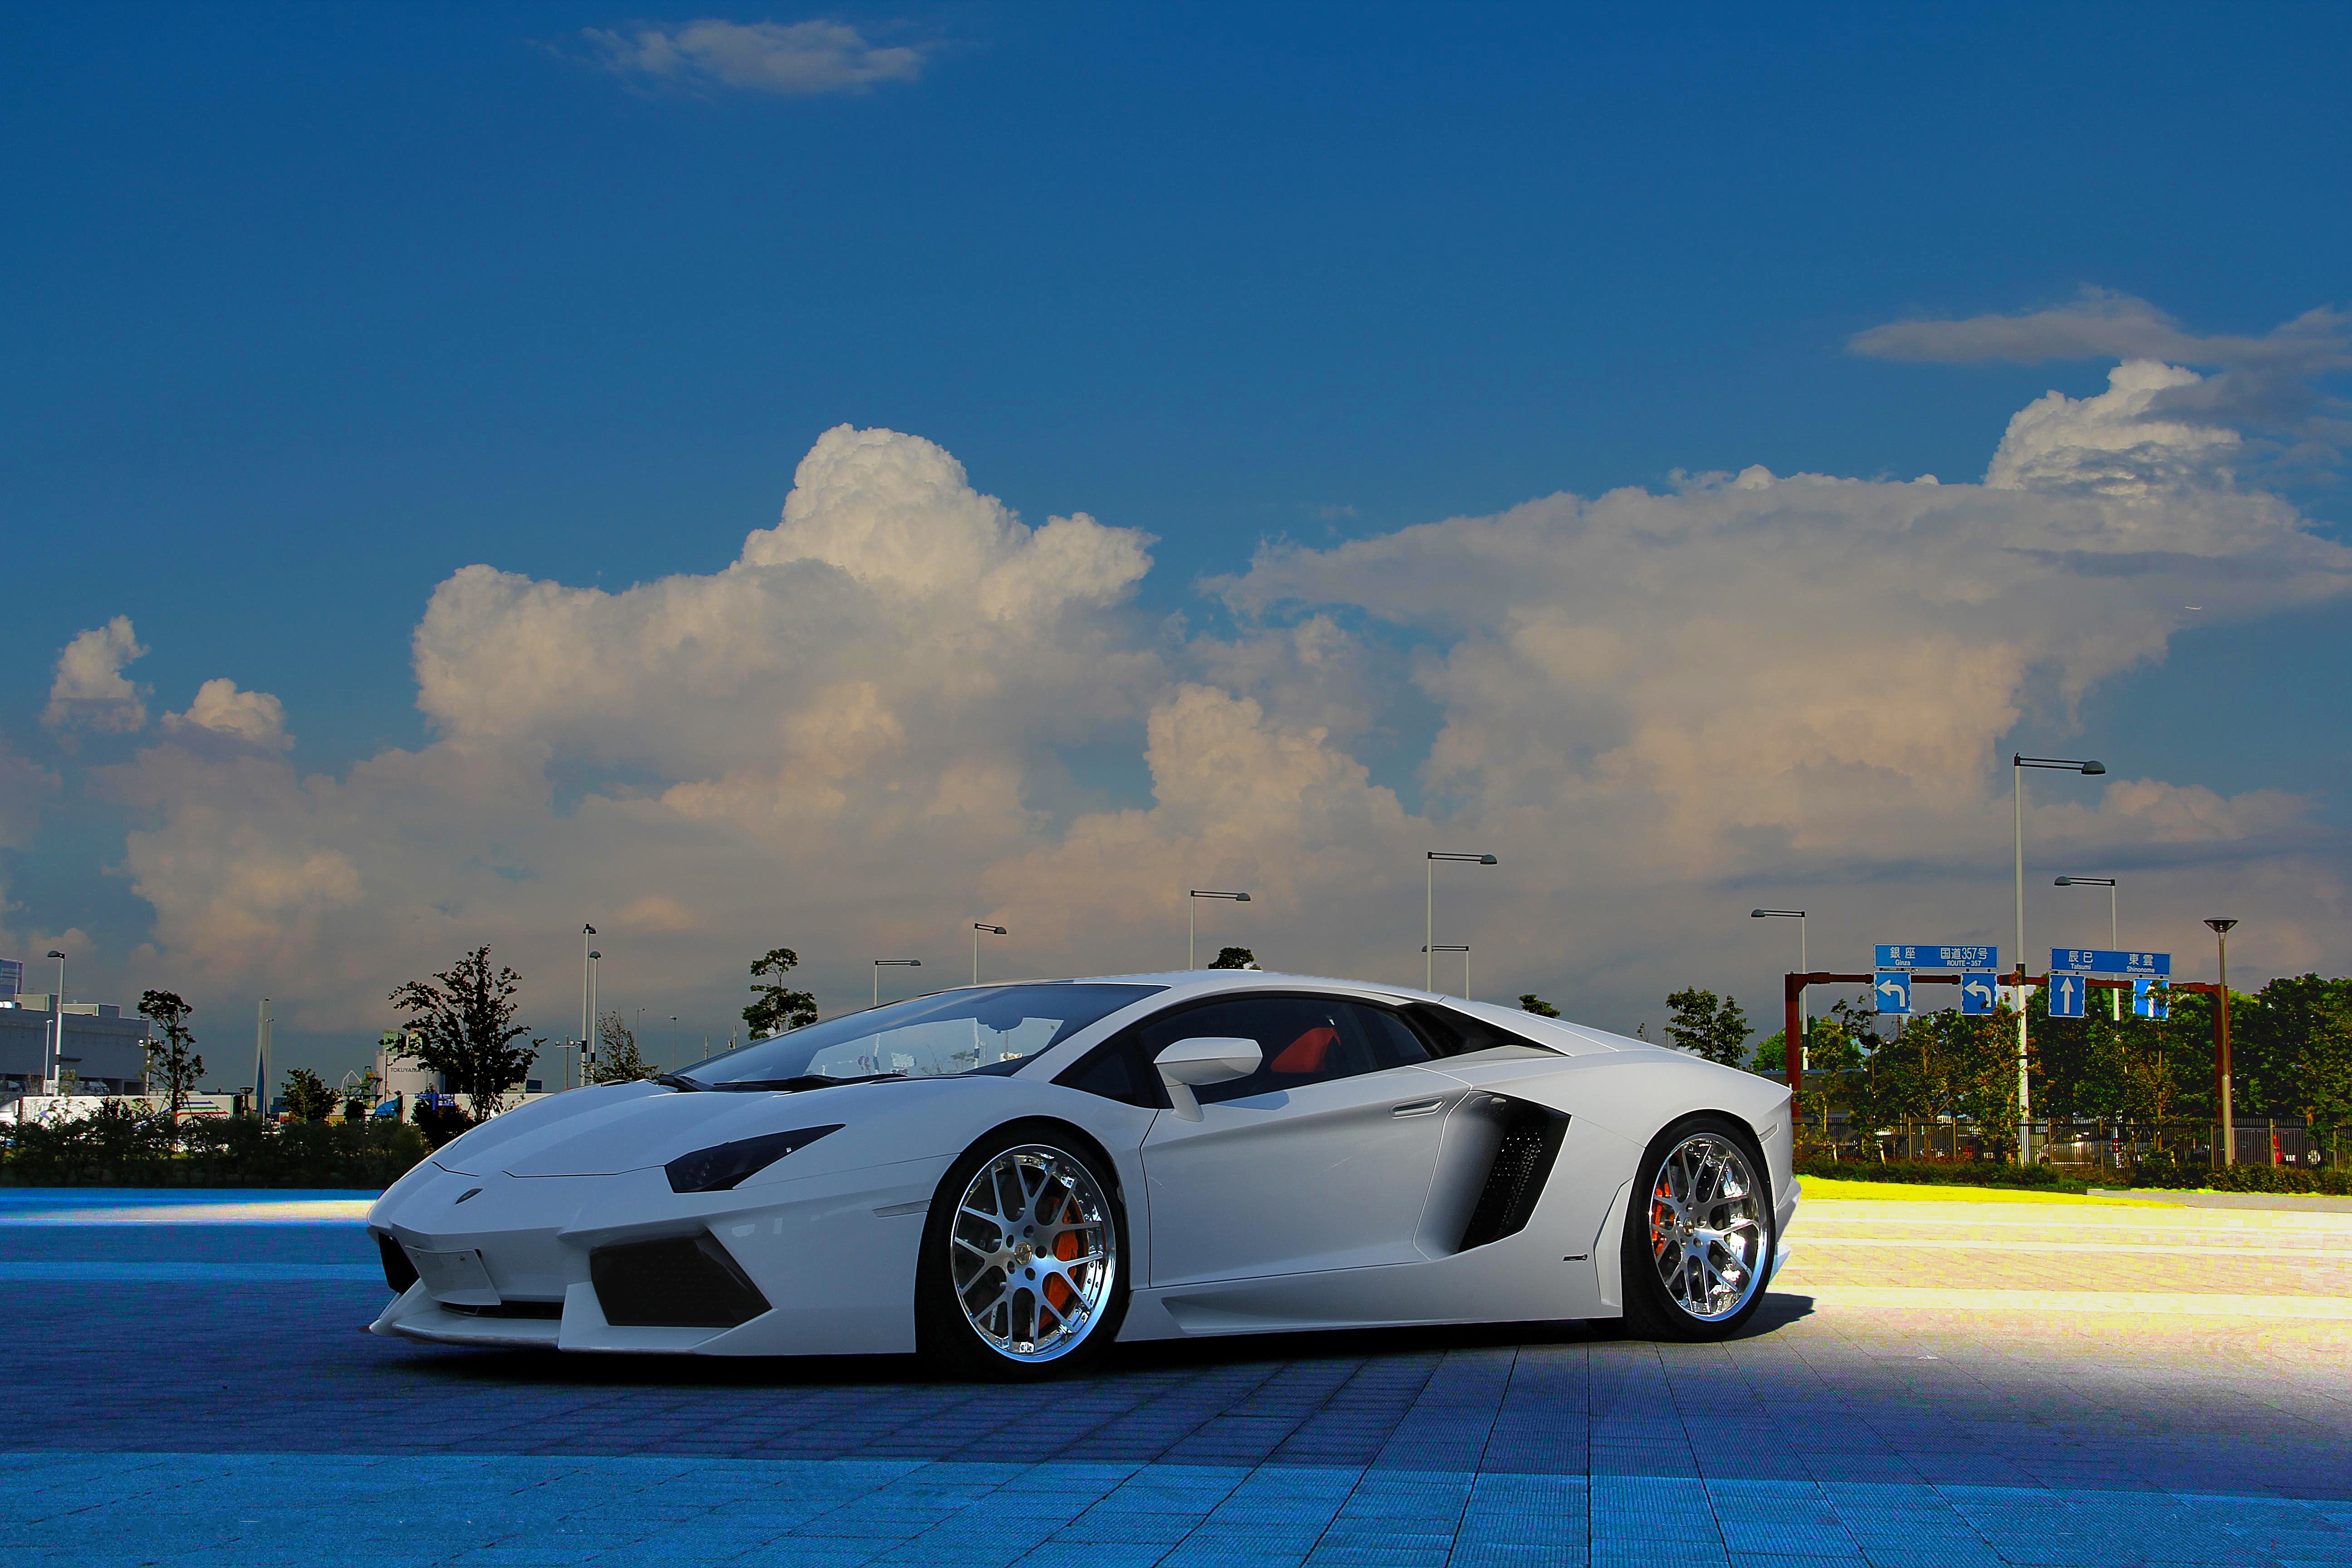 Descarga gratuita de fondo de pantalla para móvil de Lamborghini, Lamborghini Aventador, Vehículos.